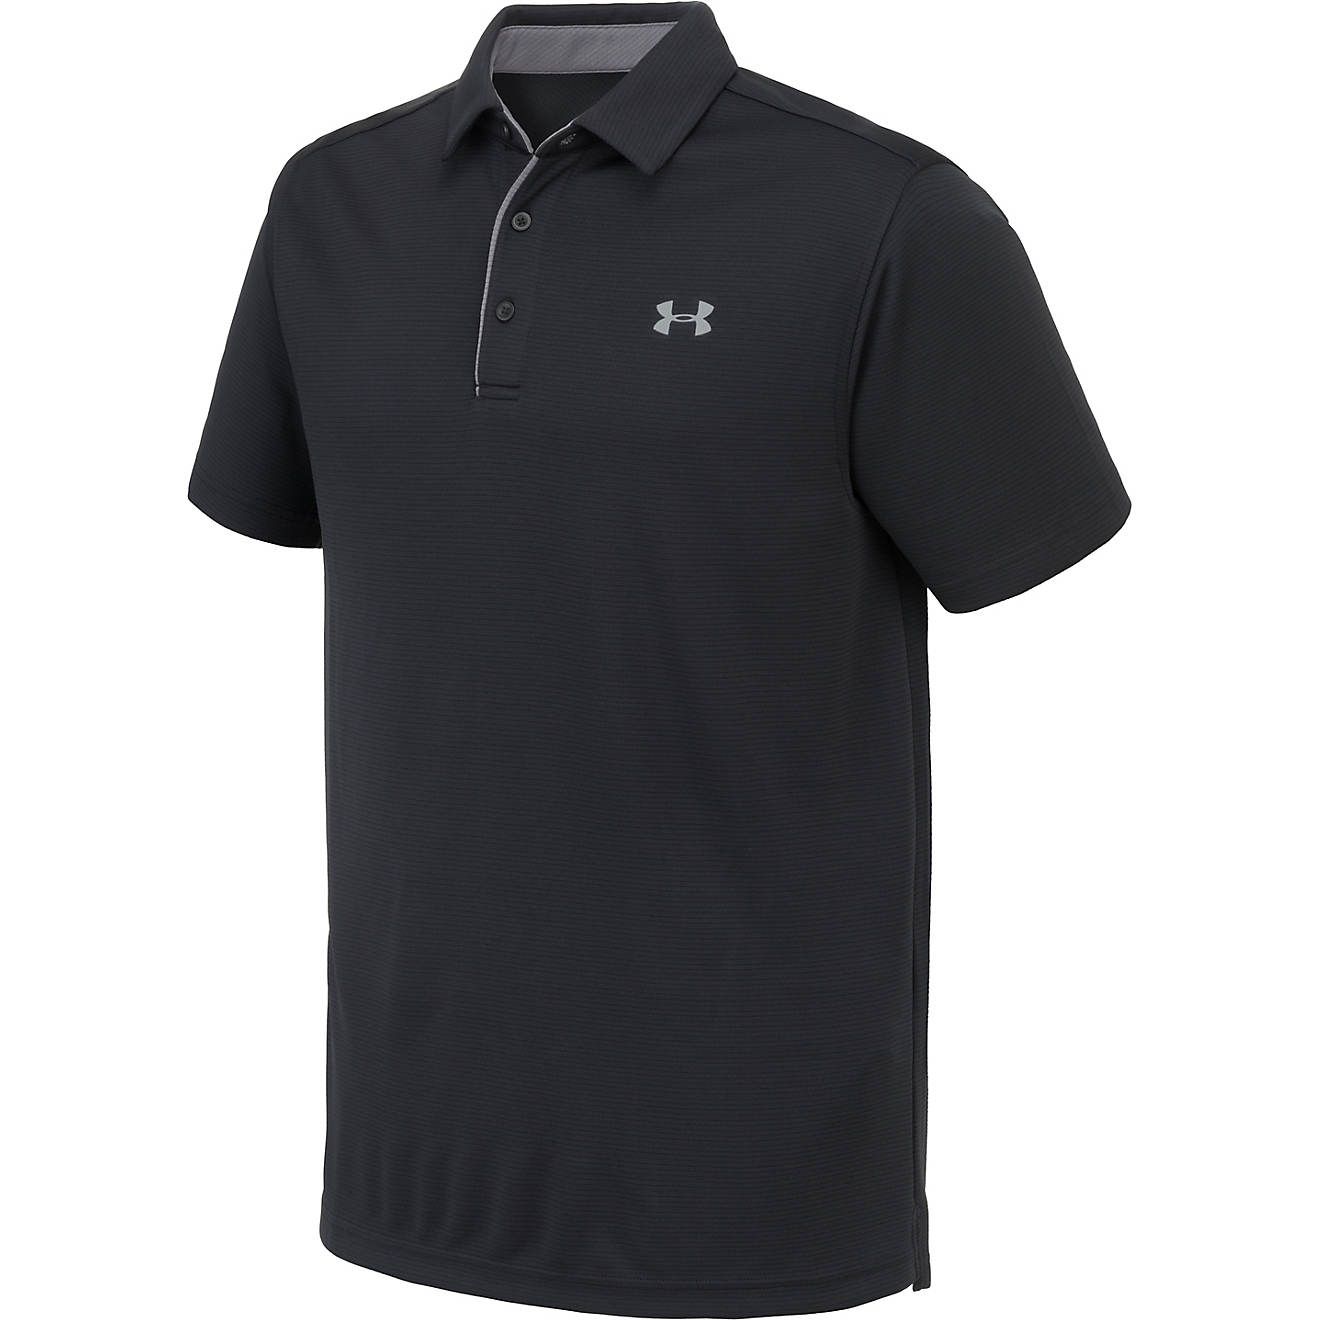 Under Armour Men's New Tech Polo Shirt | Academy | Academy Sports + Outdoors